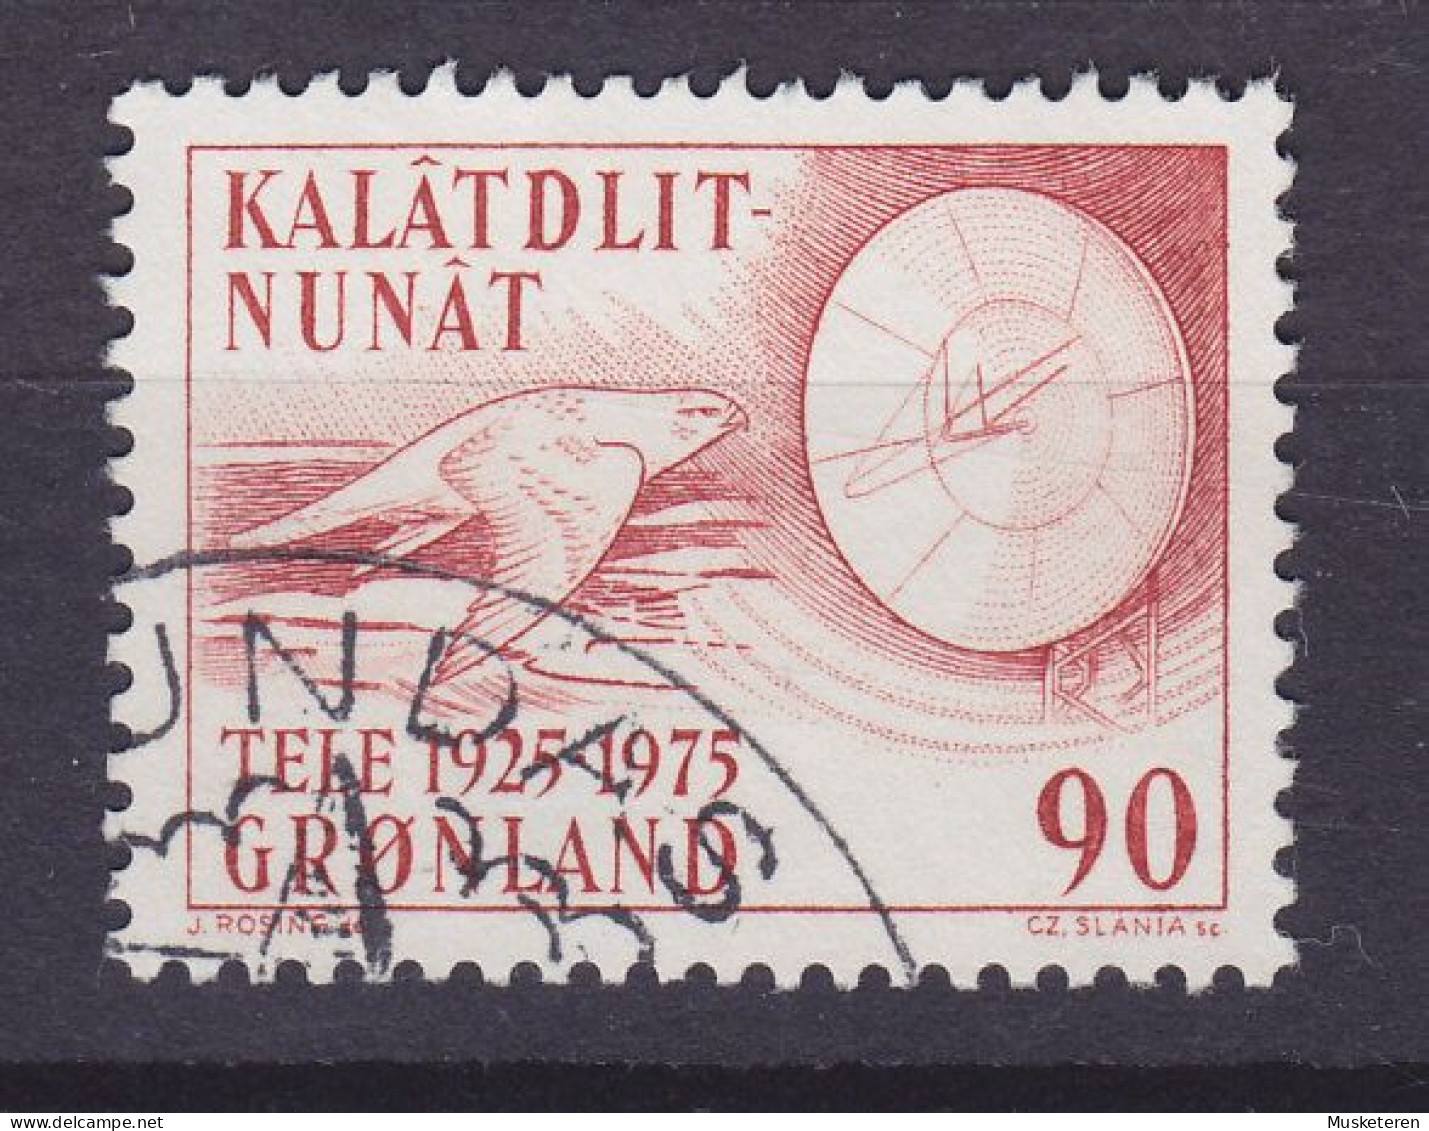 Greenland 1975 Mi. 94, 90 (Ø) Telekommunikation Bird Vogel Oiseau Gerfalke Parabolantenne (Cz. Slania) - Oblitérés